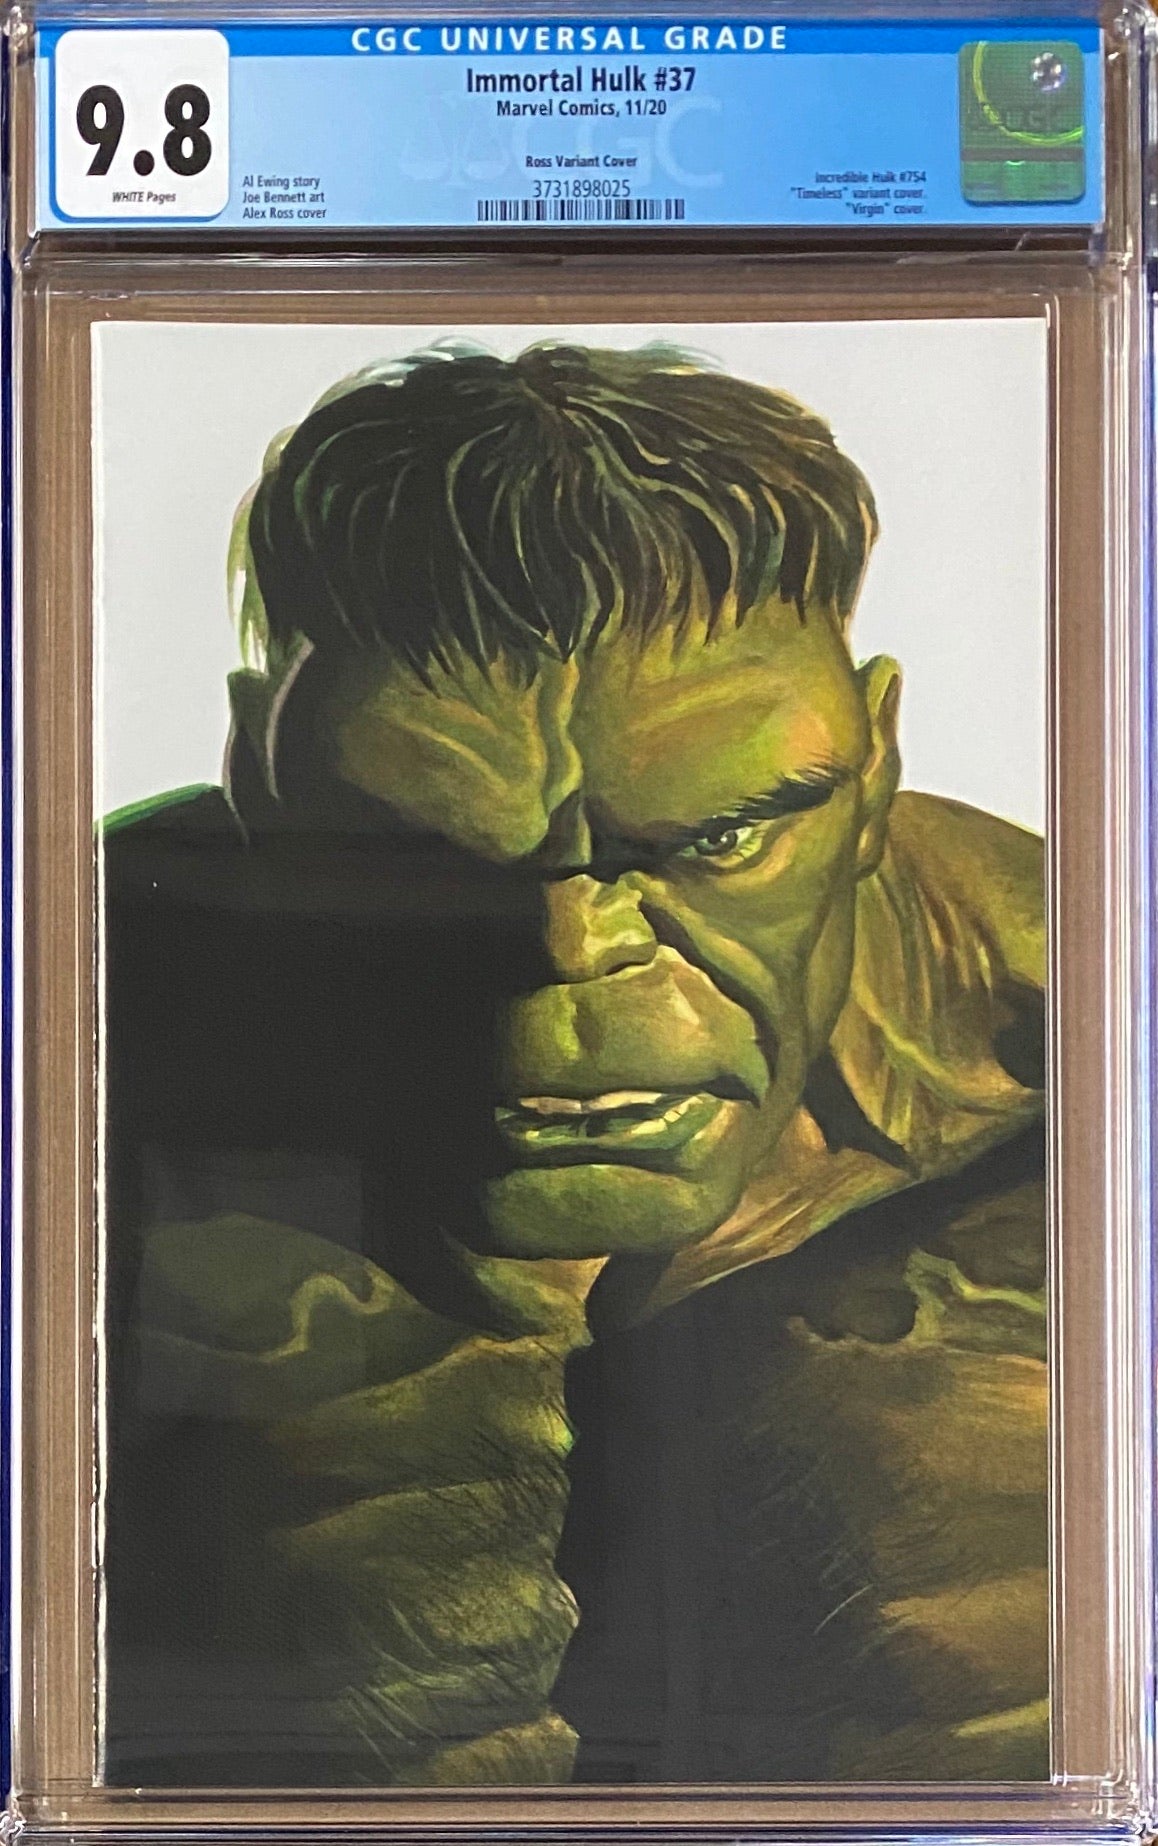 Immortal Hulk #37 Alex Ross "Timeless" Variant CGC 9.8